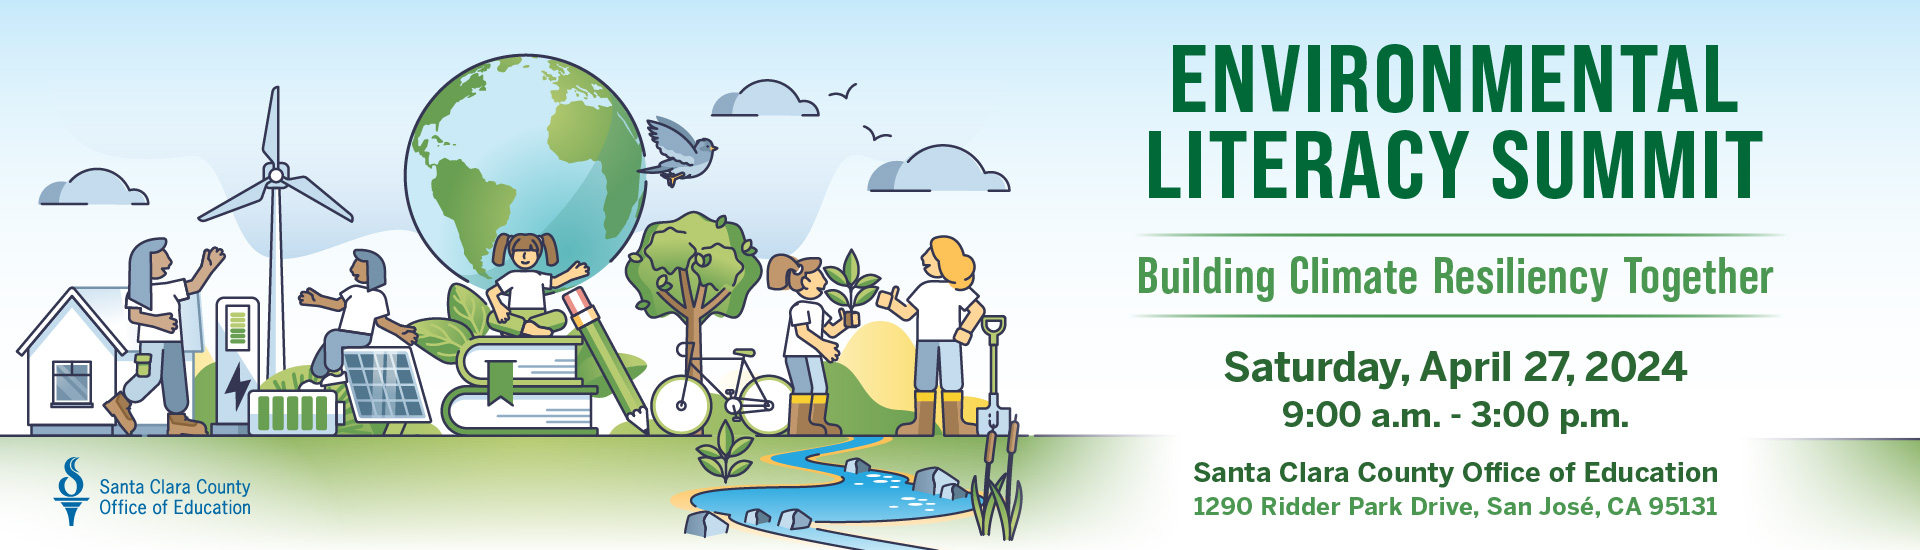 Environmental Literacy Summit 2024